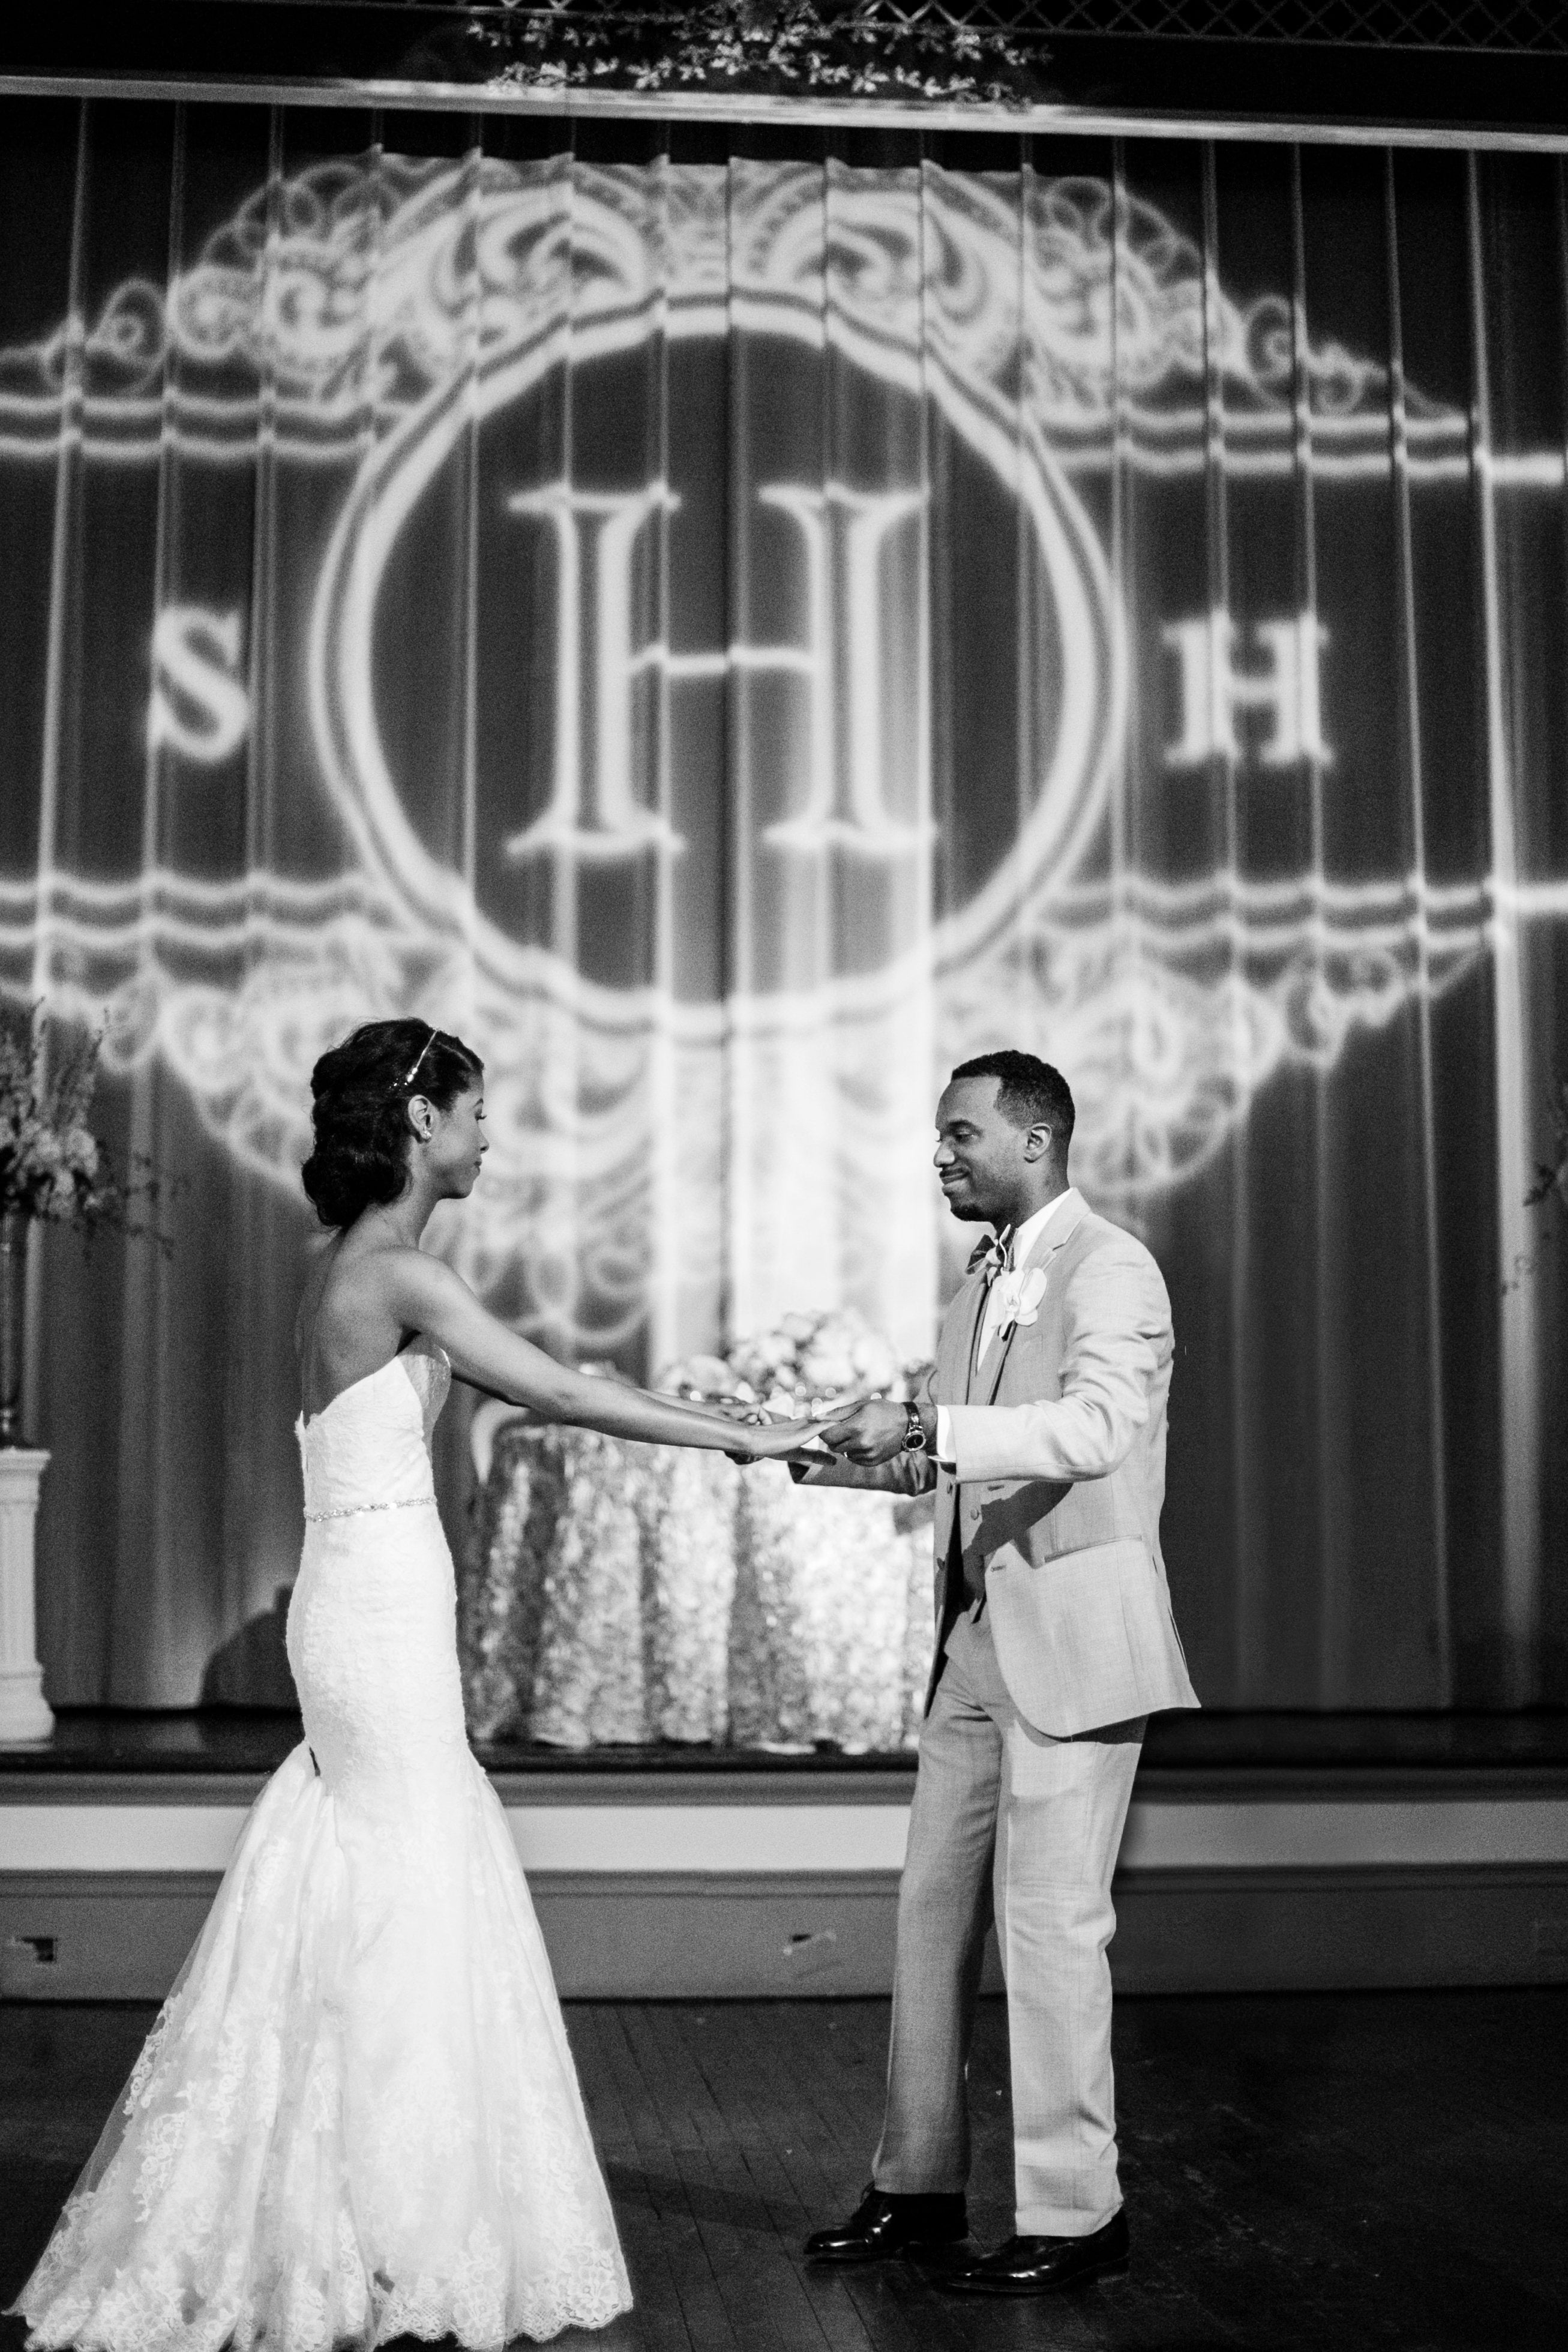 Bridal Bliss: Harrison and Shamara's Old Hollywood Wedding Was Everything You'd Imagine
